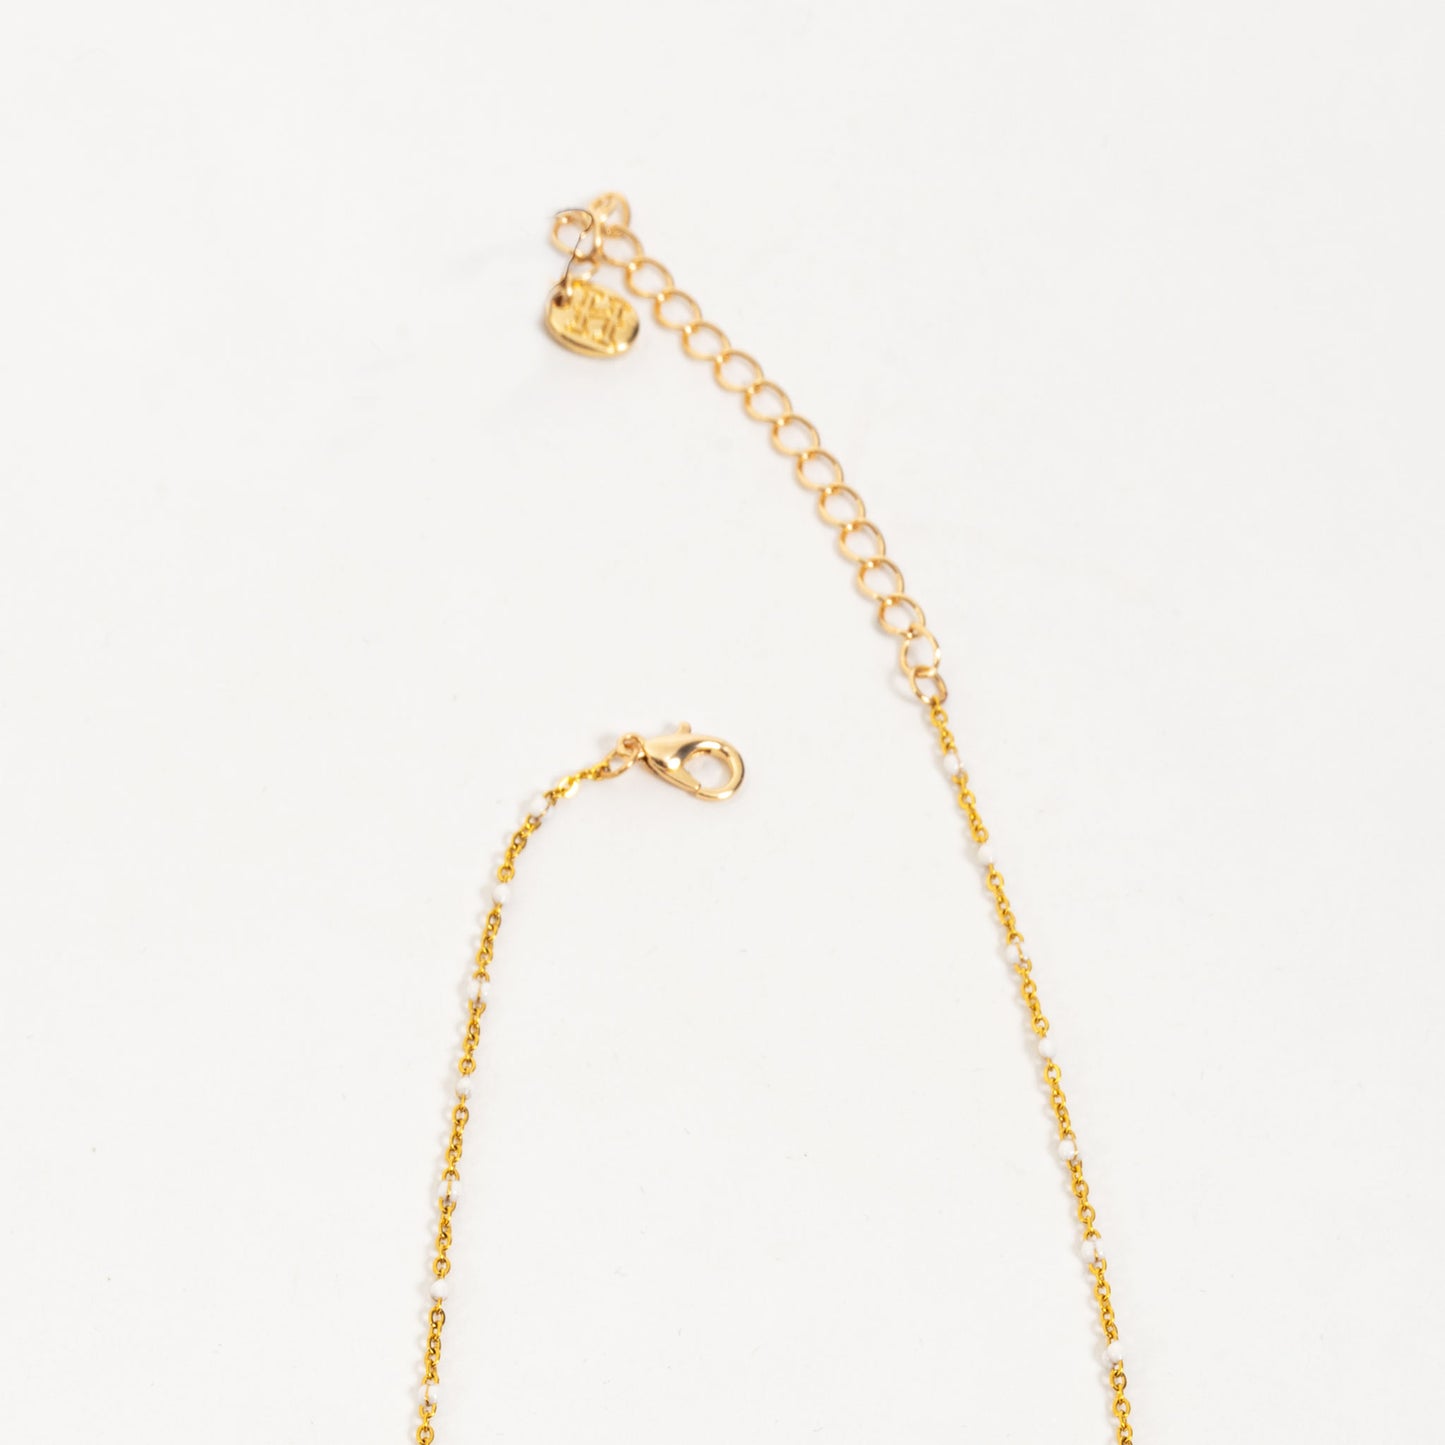 16" Enamel Necklace Chain